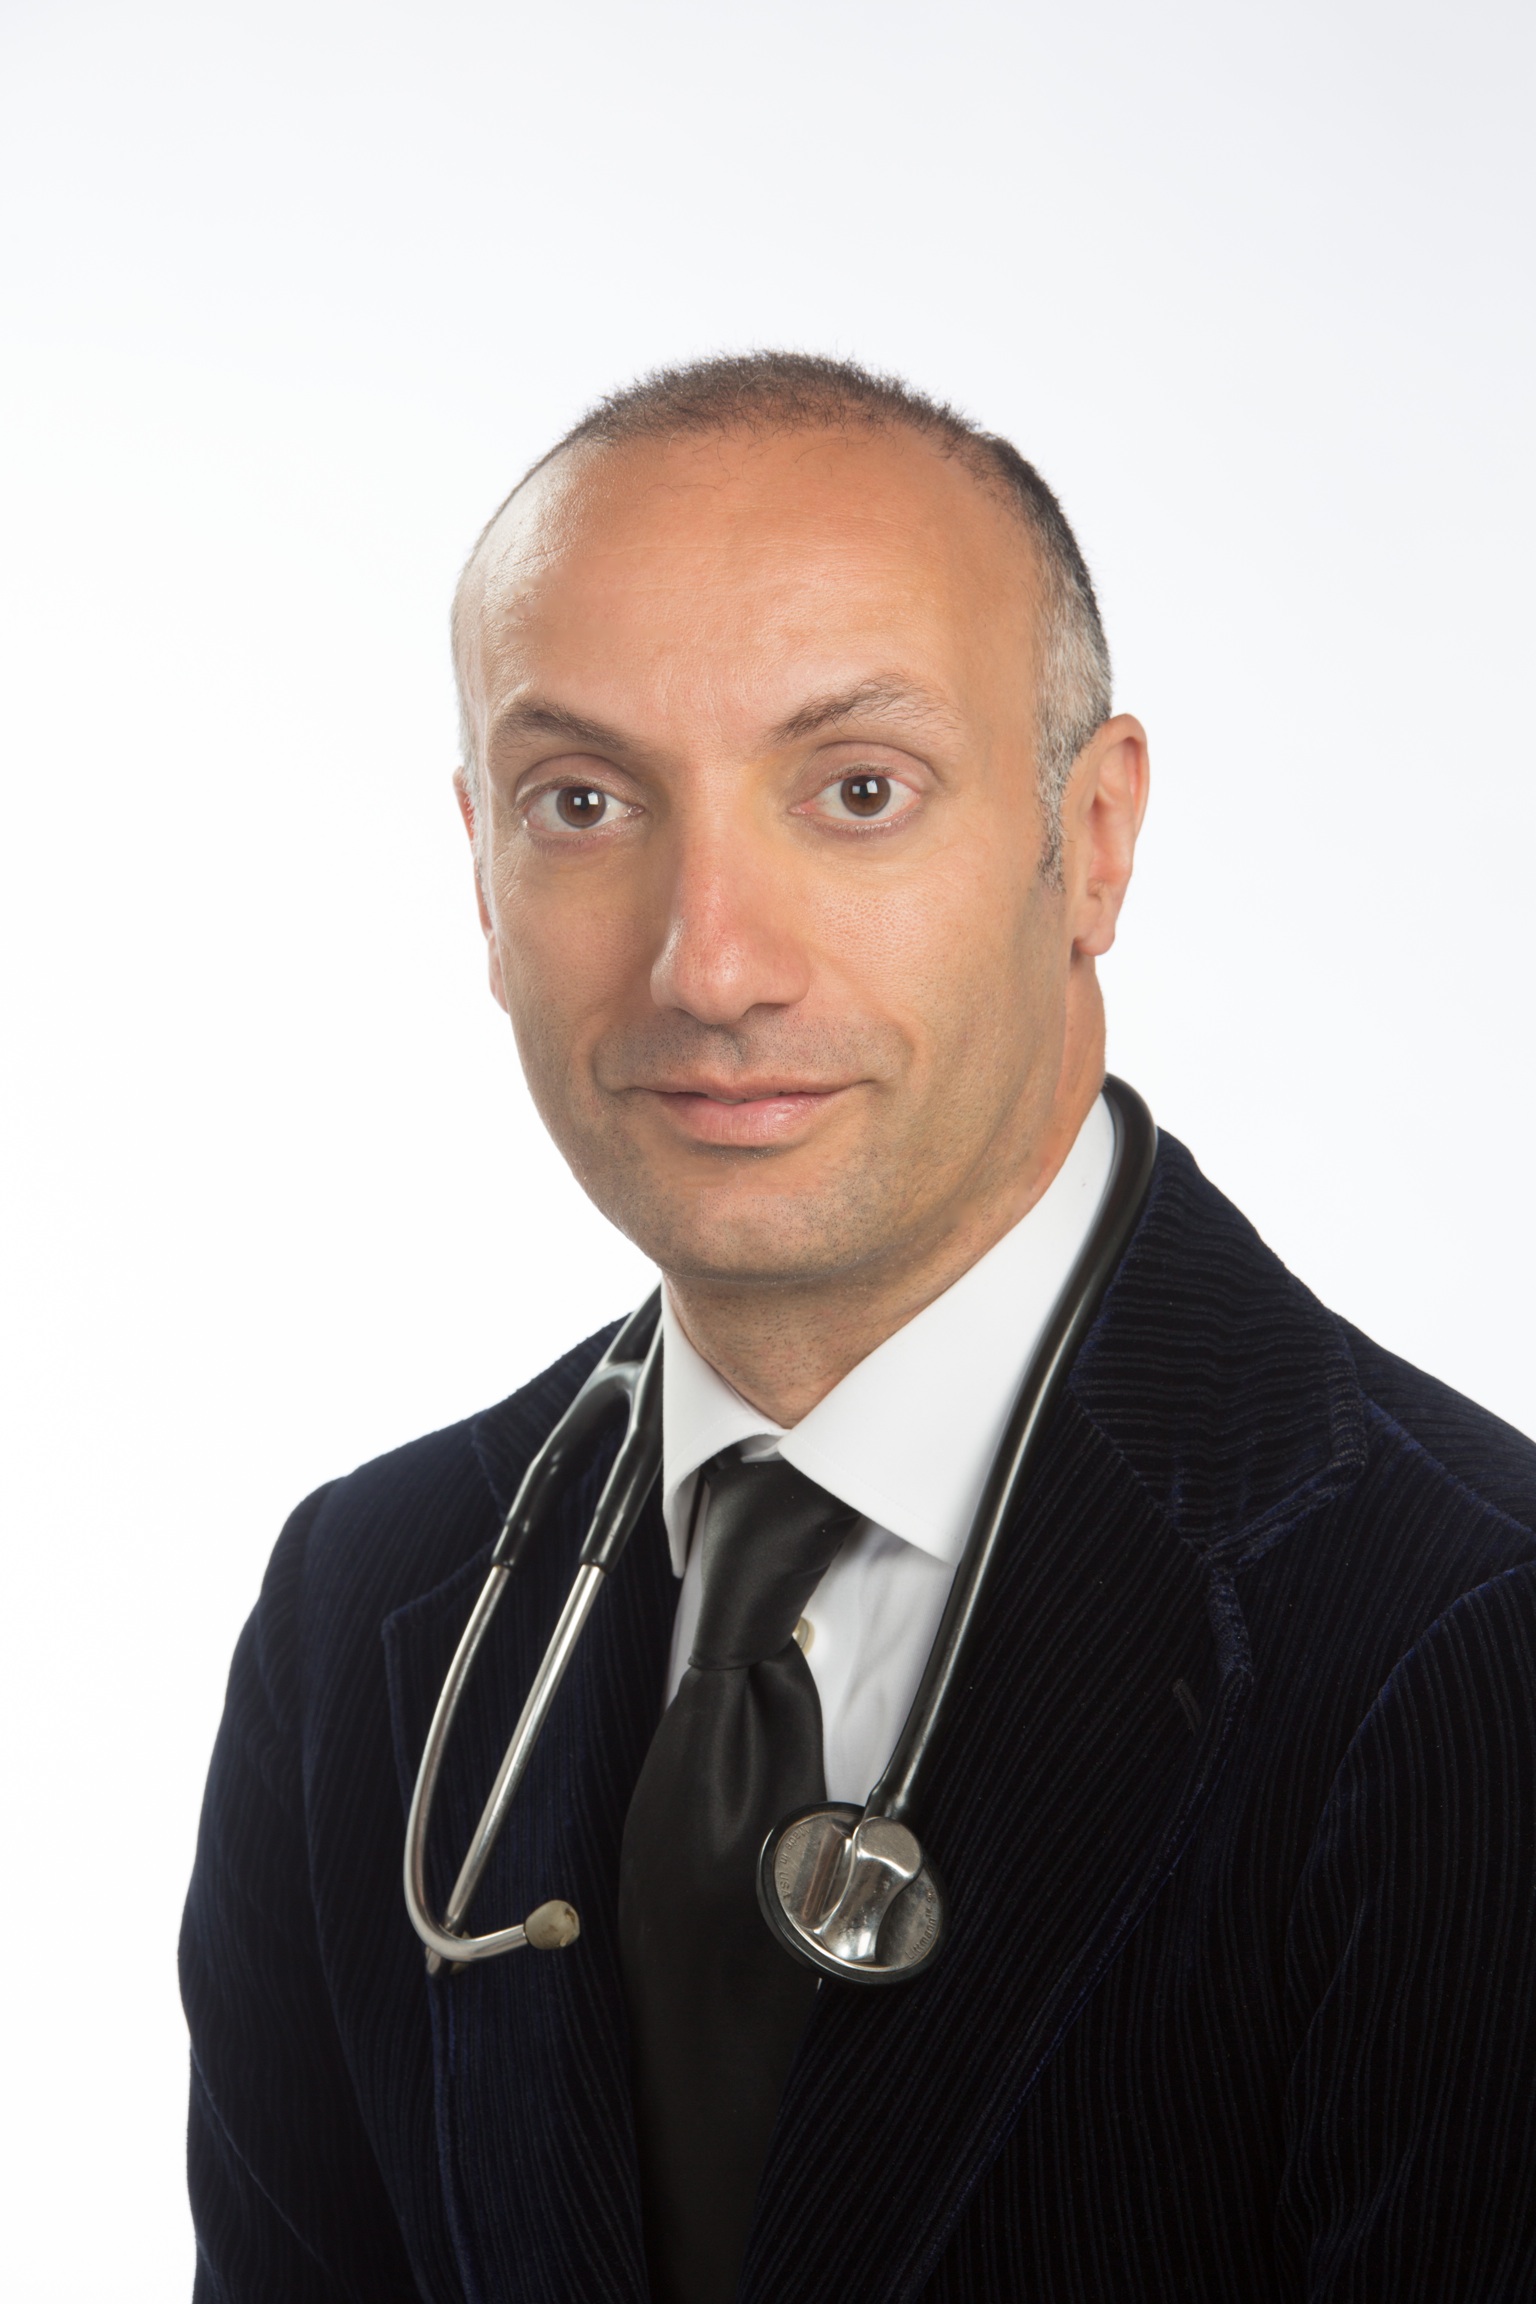 Robert Ferrari, clinical professor in the Department of Medicine, Faculty of Medicine & Dentistry, University of Alberta